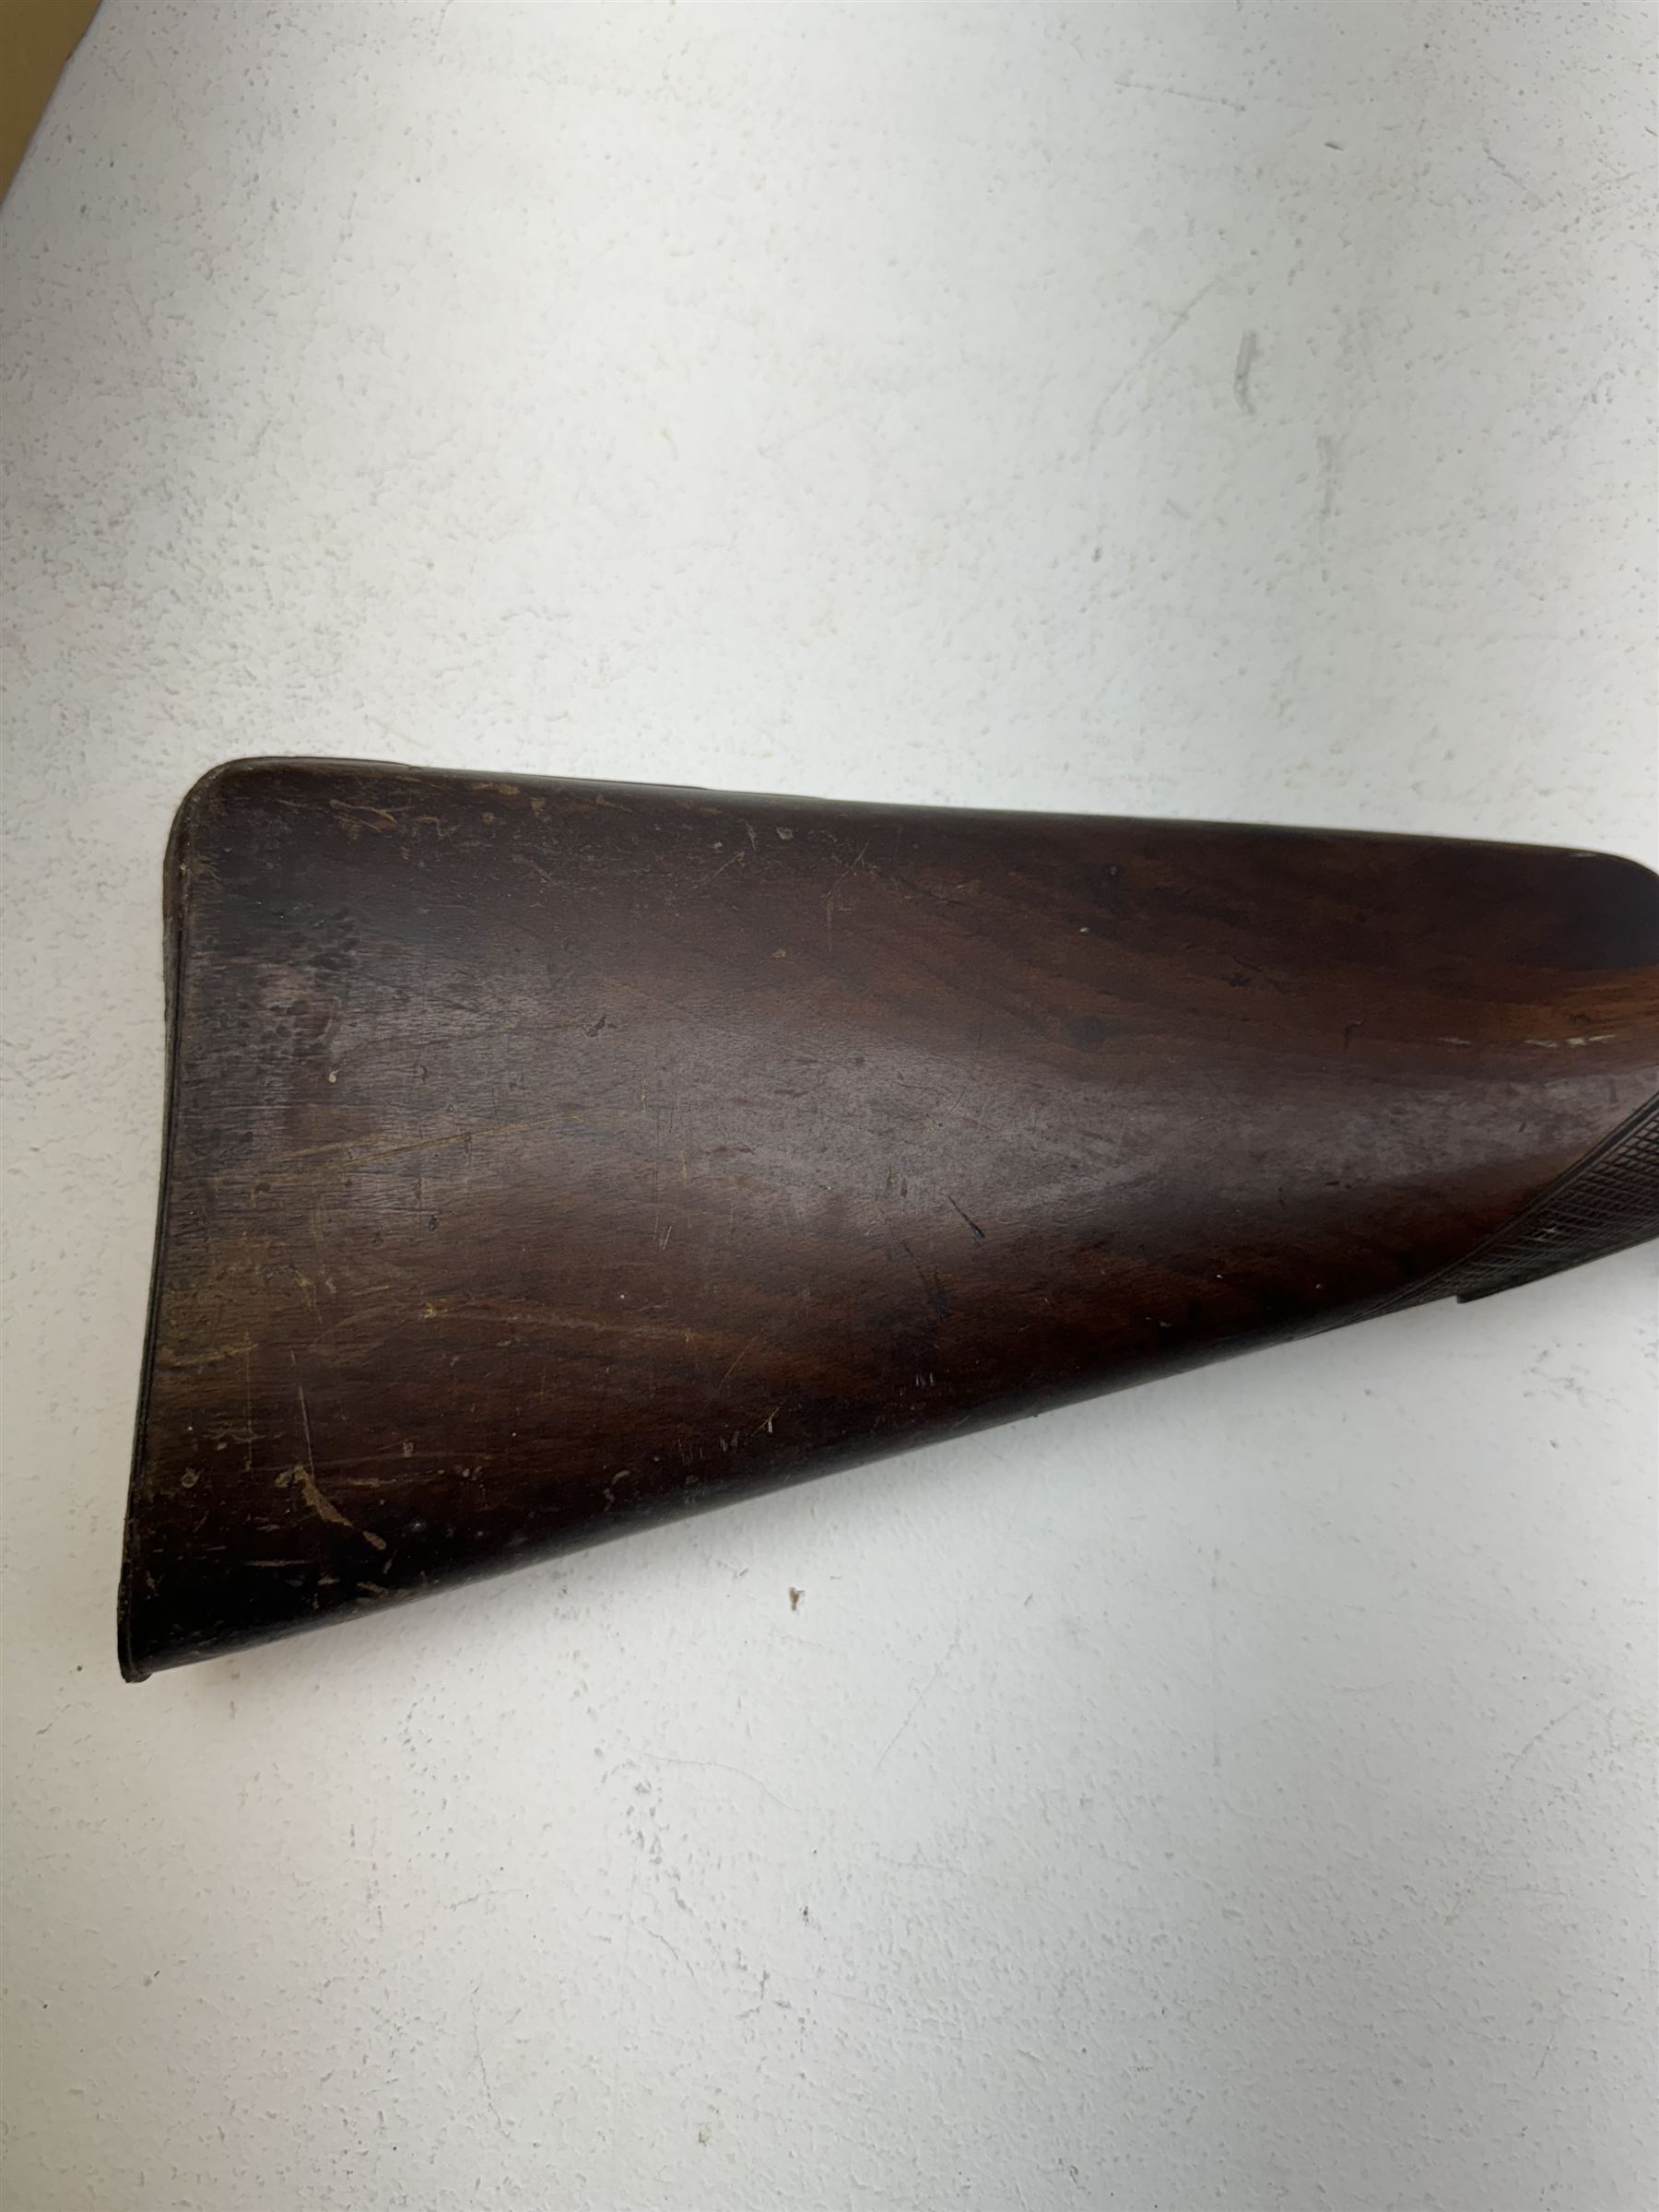 19th century single barrel percussion fire shotgun - Image 9 of 13